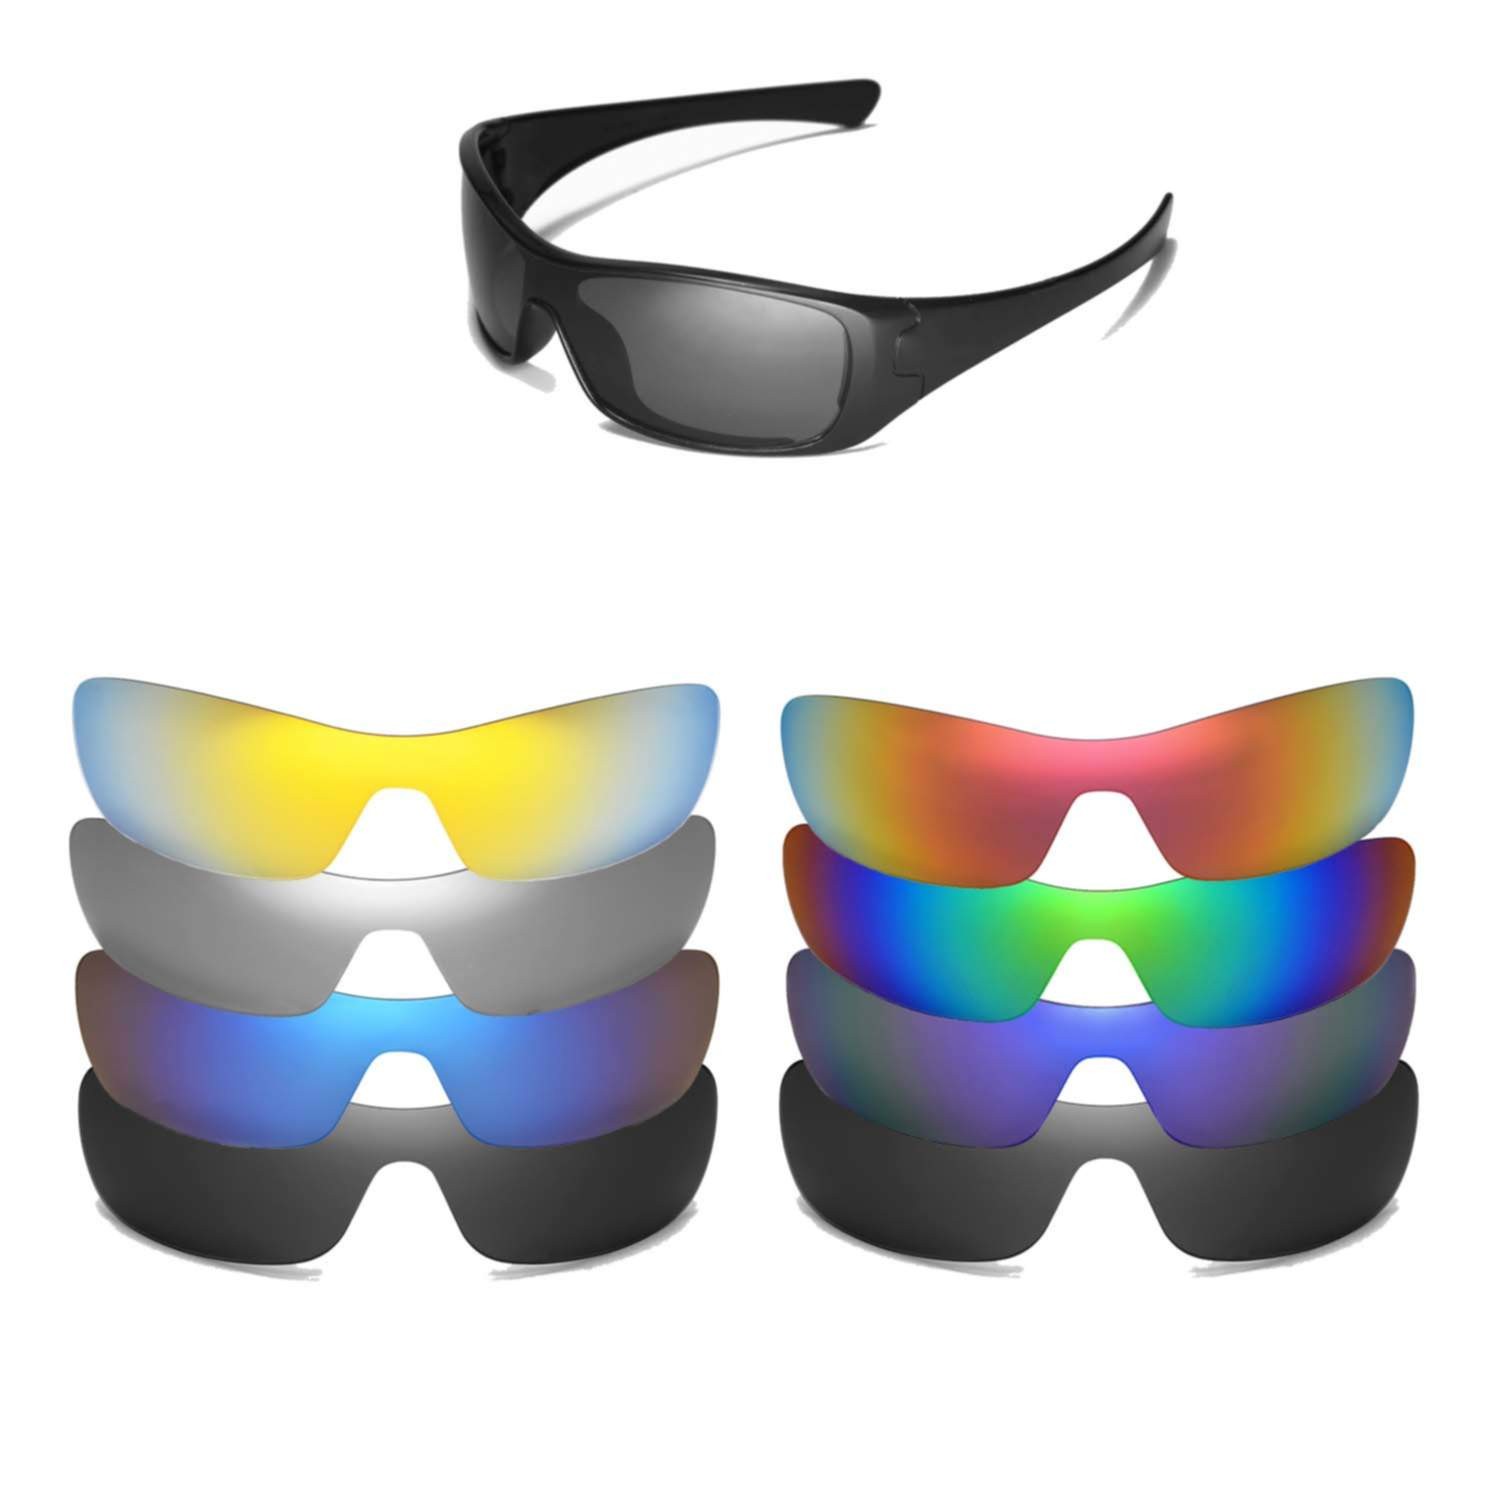 Oakley Antix Sunglasses